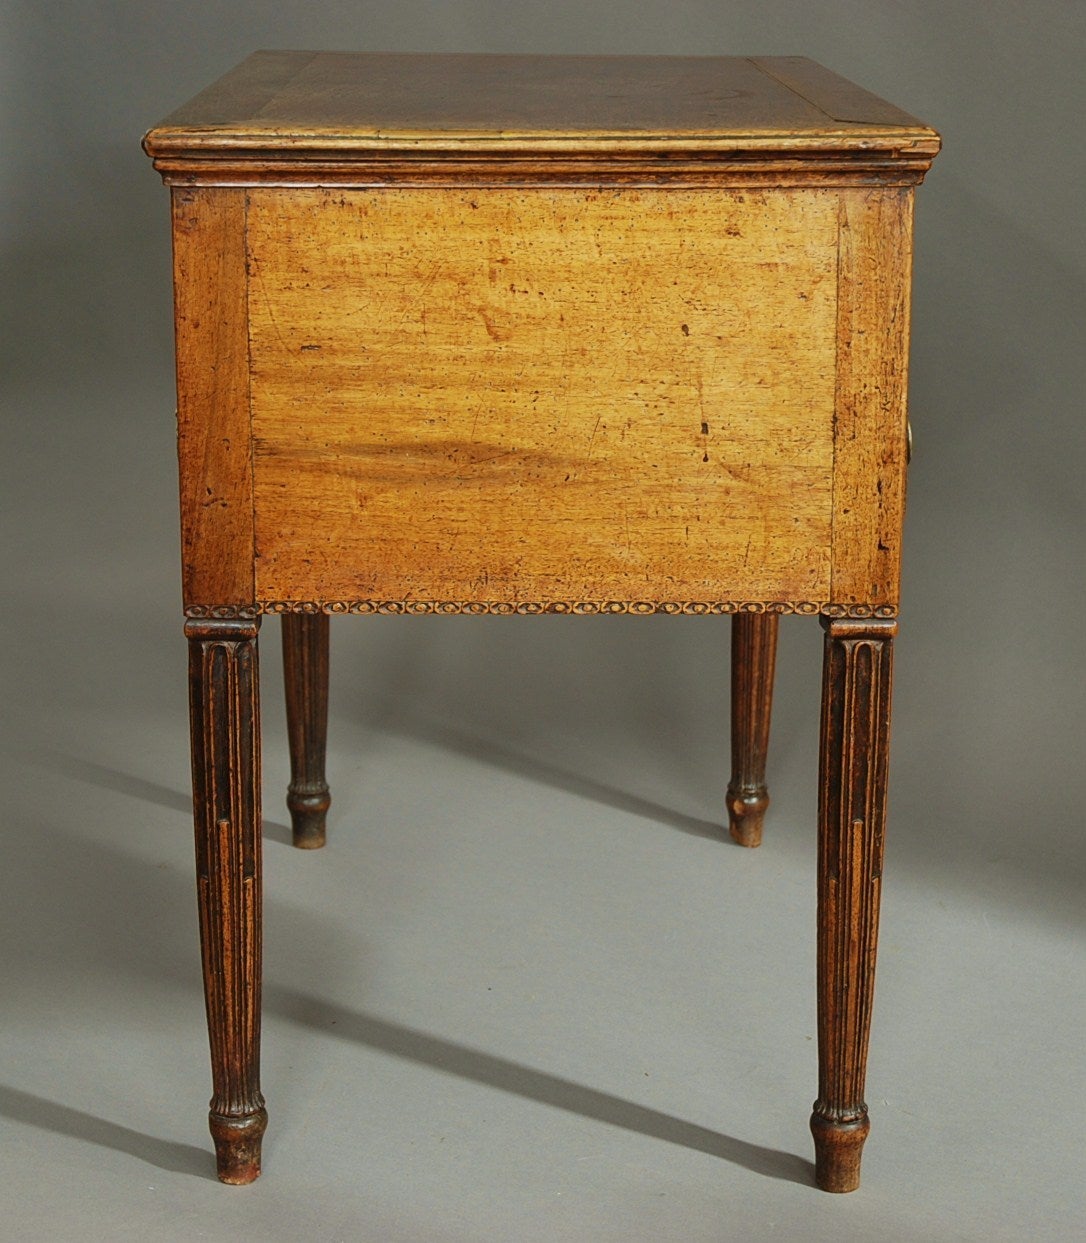 18th Century Continental (Possibly Dutch) Walnut Desk or Table 1